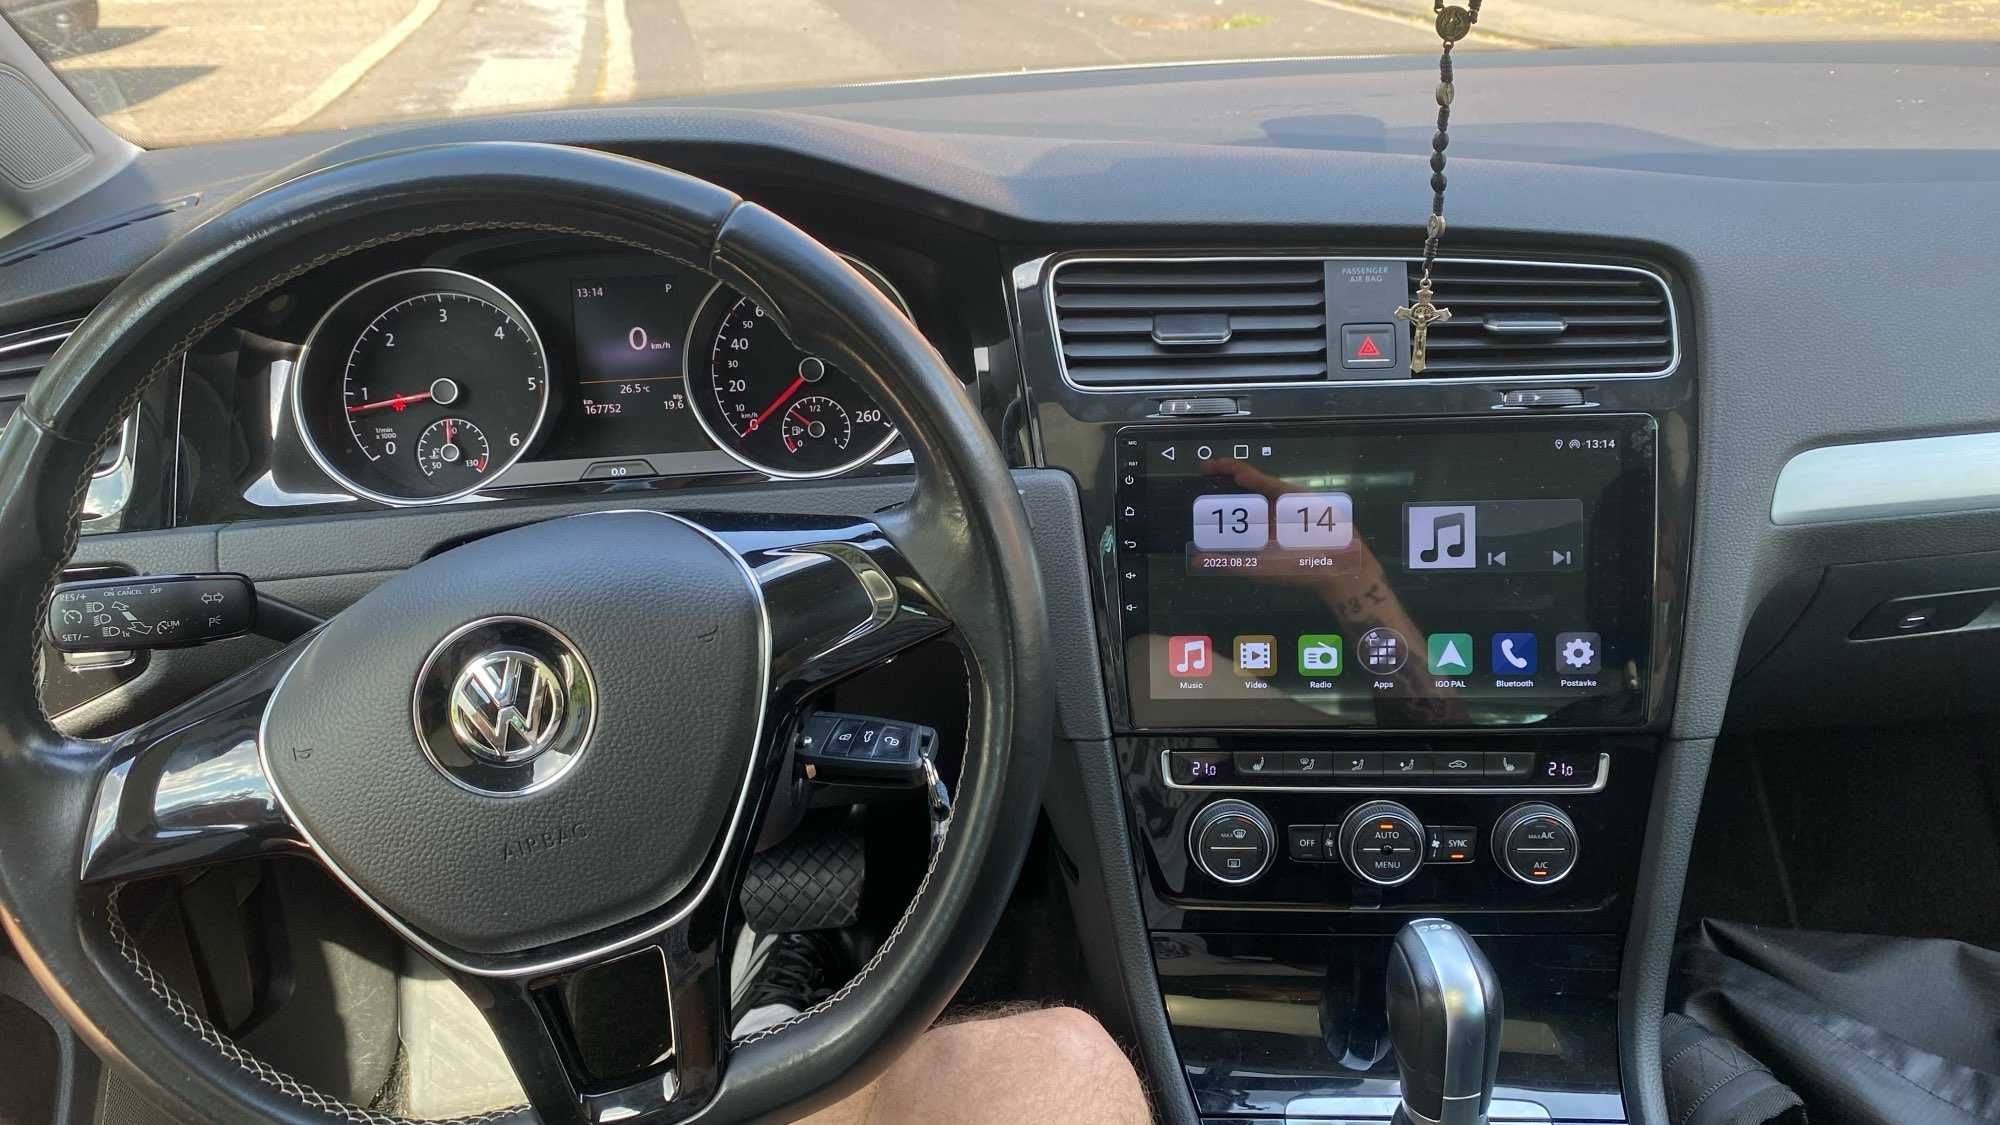 (NOVO) Rádio 2DIN • Volkswagen GOLF 7 / VII • [2+32GB] • Android GPS